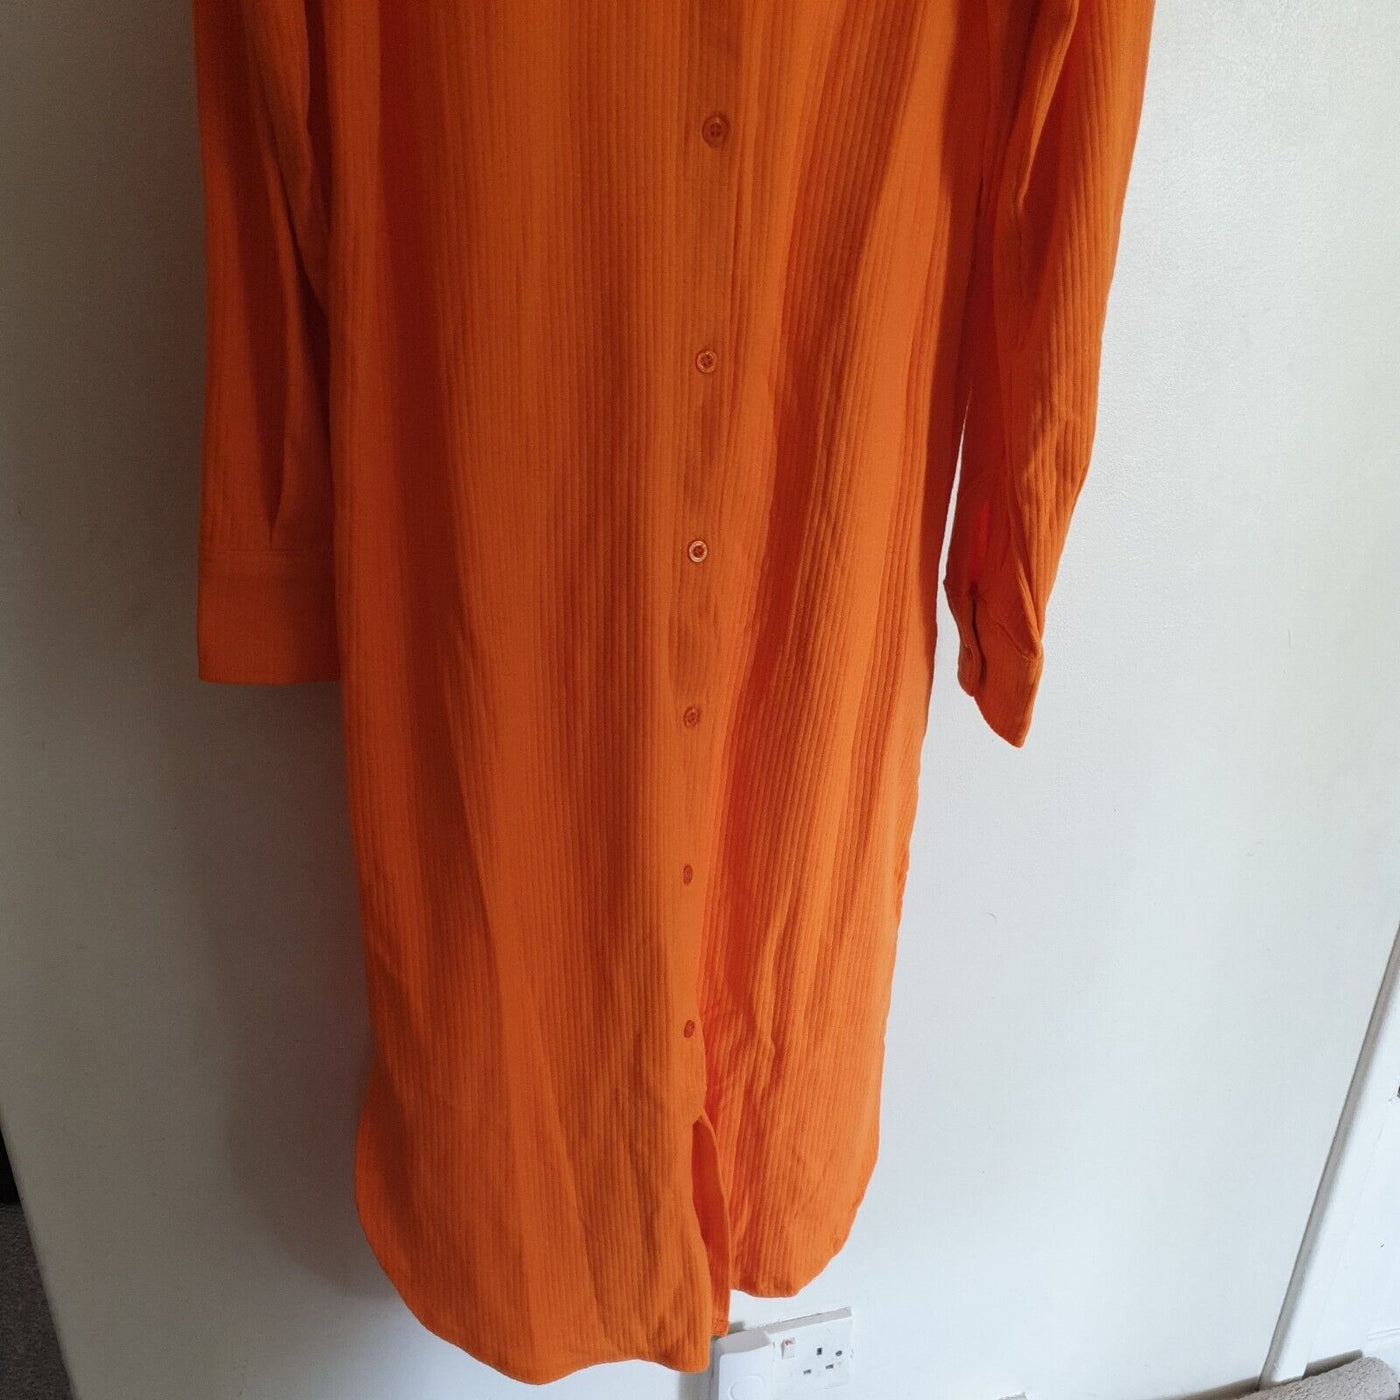 Missguided oversized rib Orange Jumper midi Dress Uk12****Ref V148